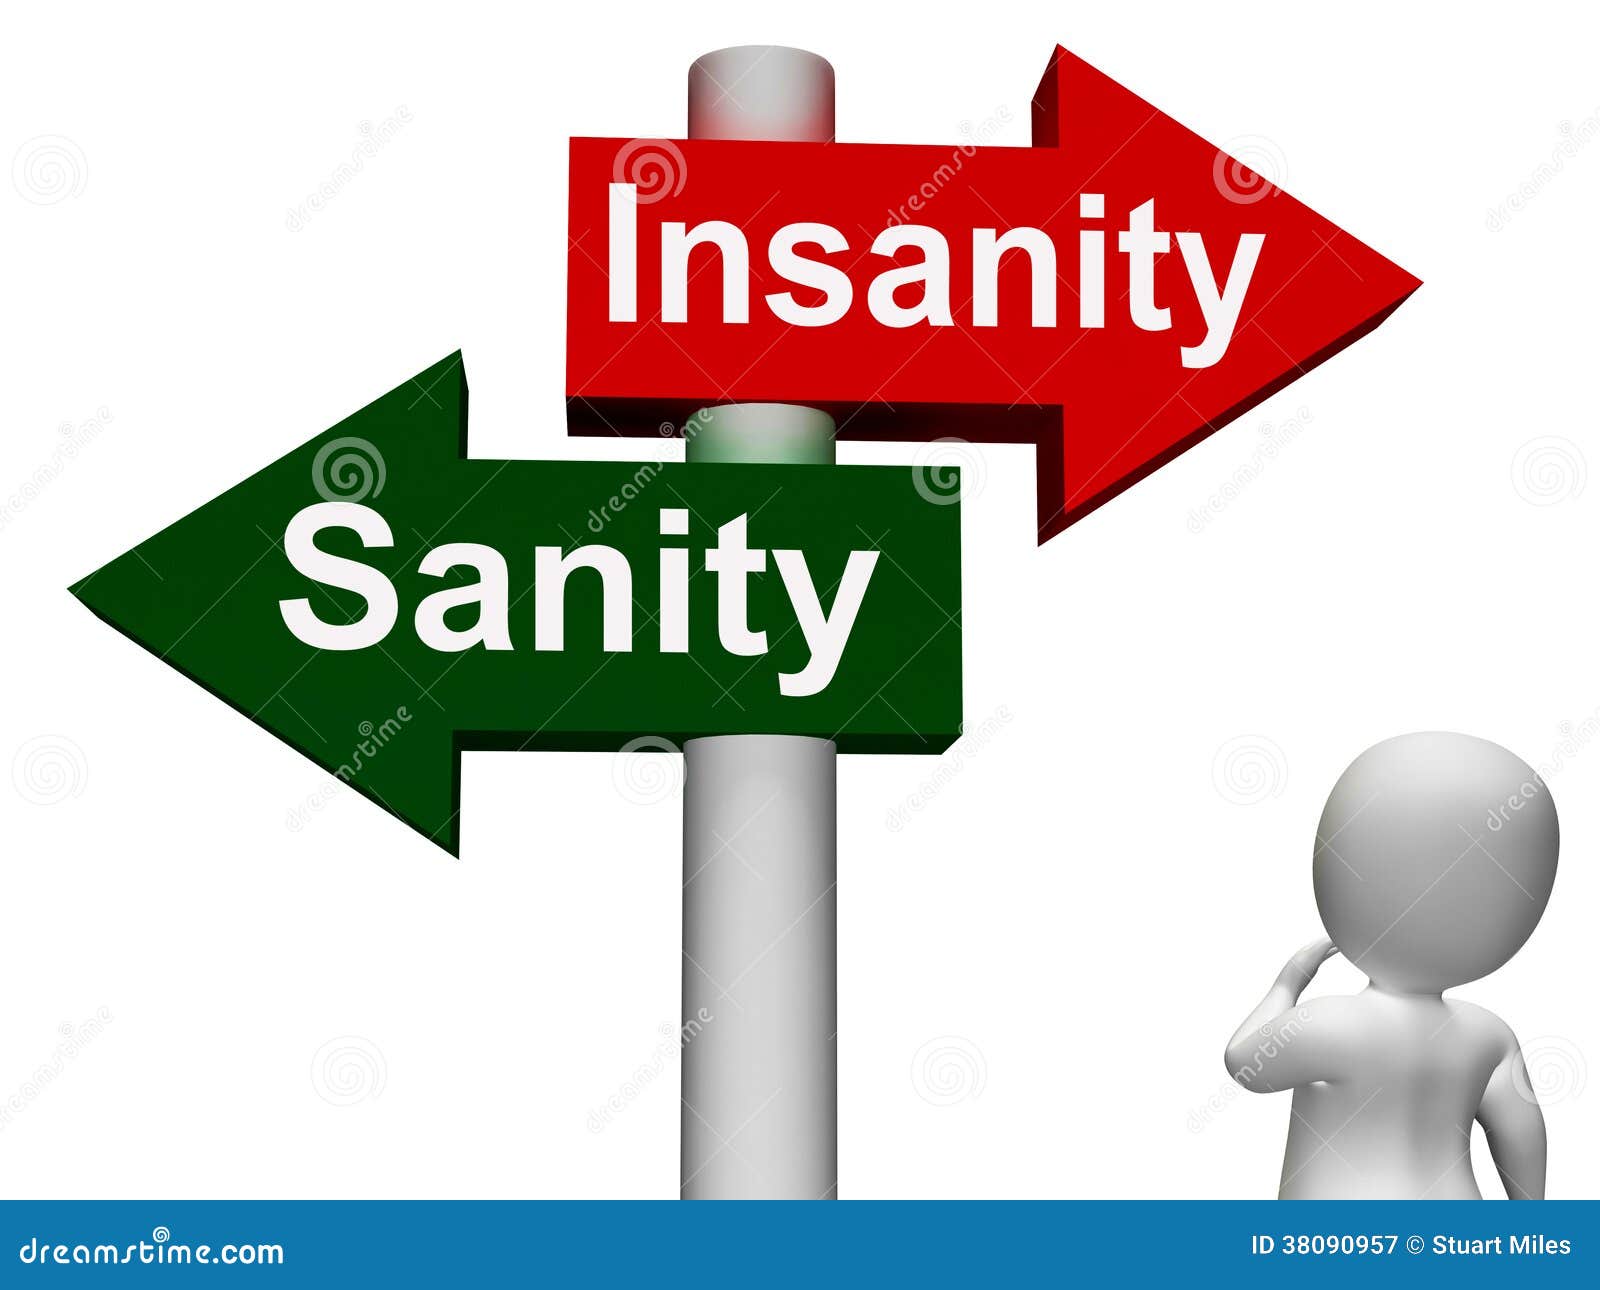 insanity sanity signpost shows sane or insane